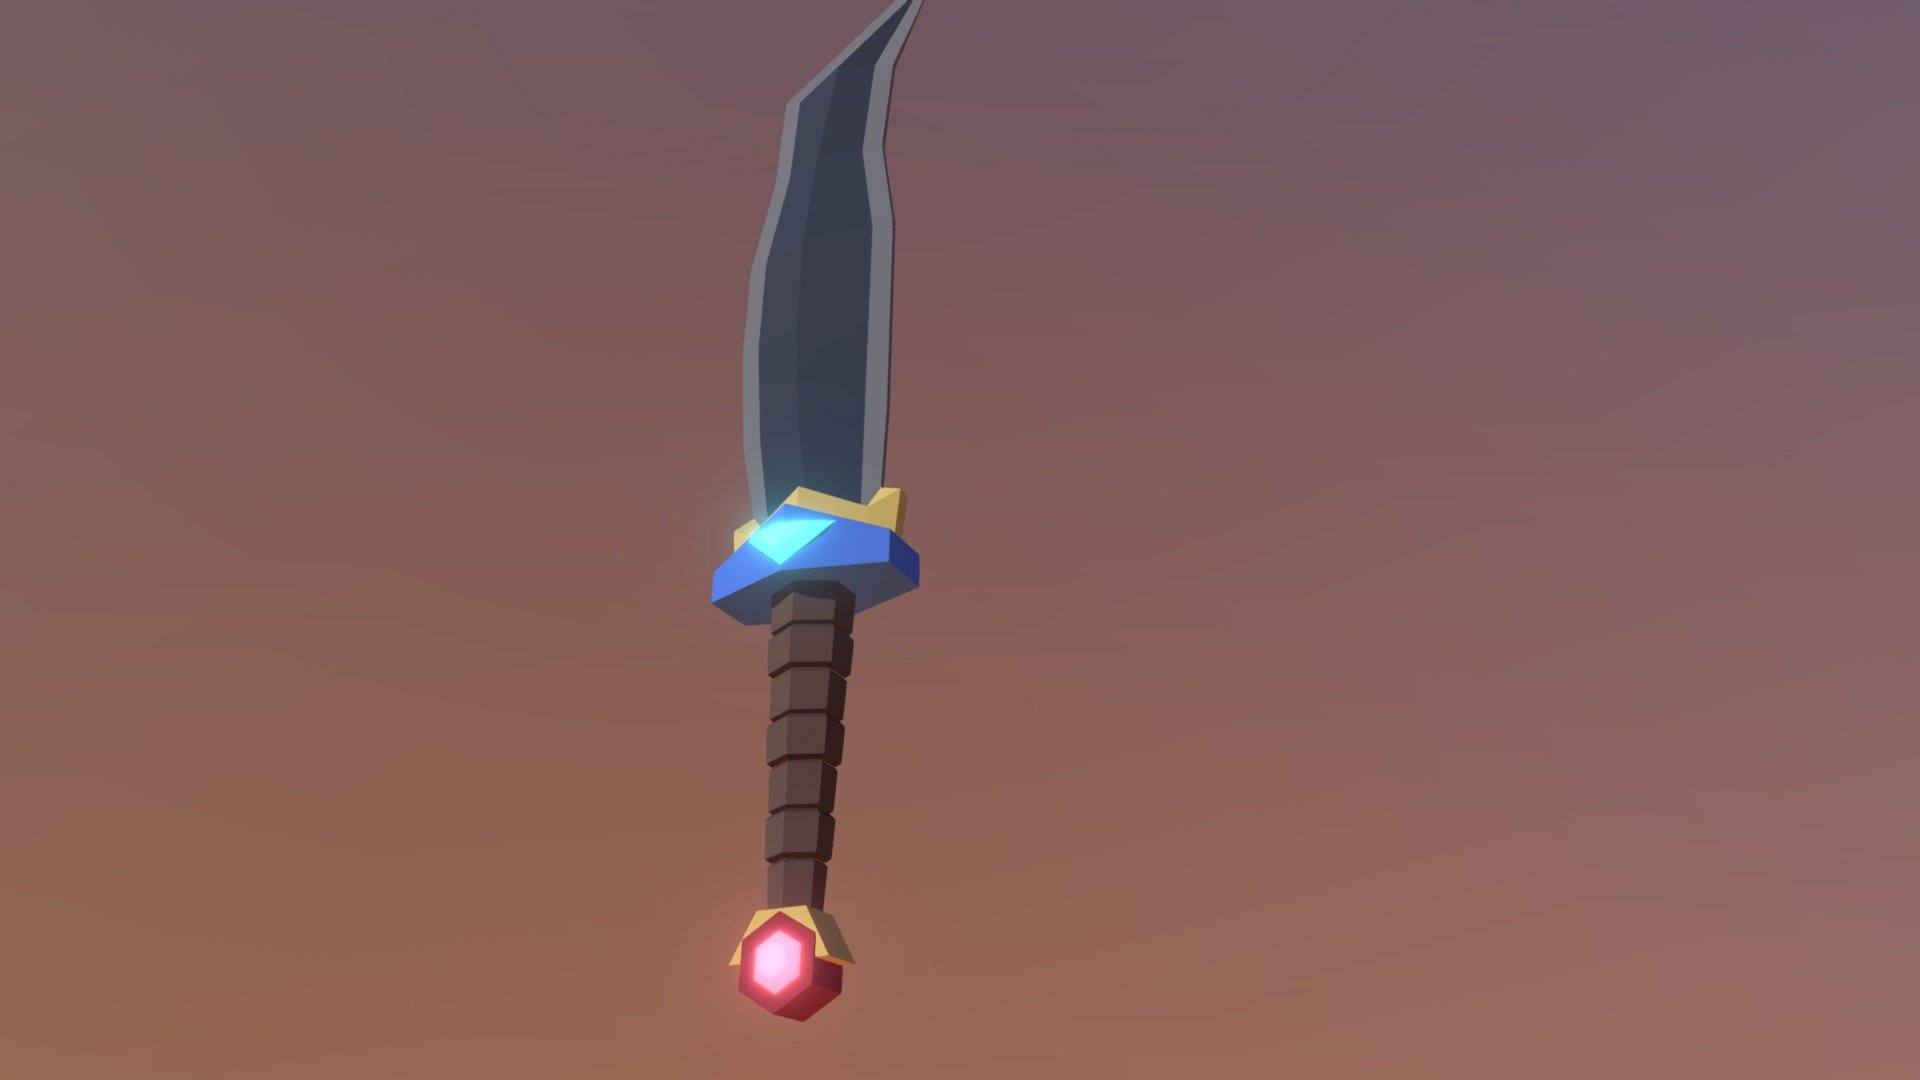 Cartoon sword